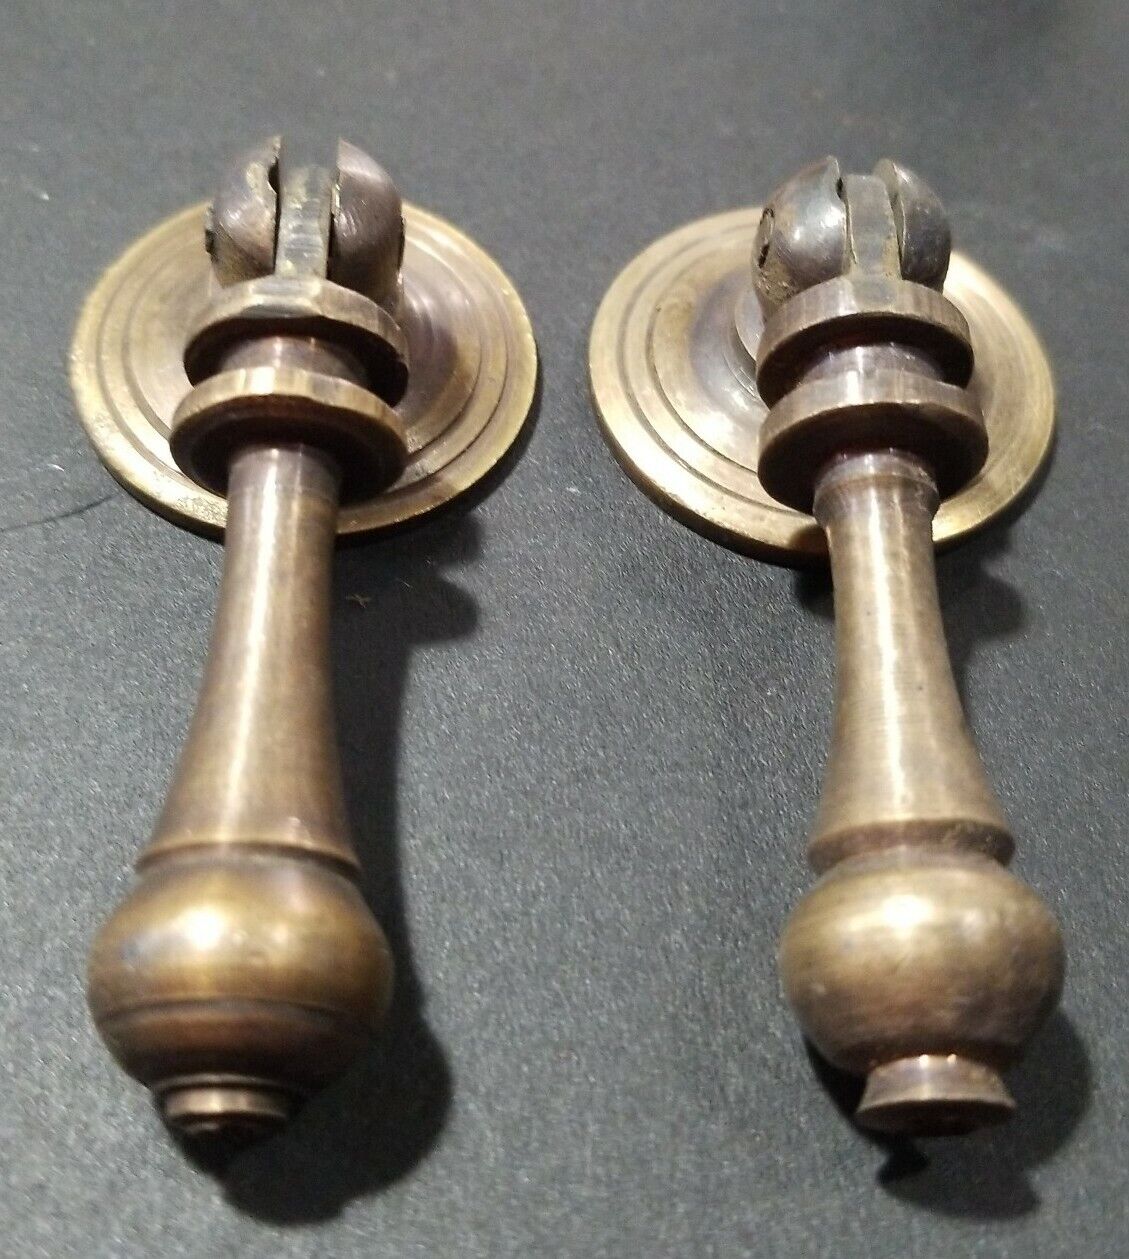 2 NICE ornate tear drop pendant brass handle pulls w. strong bolts 2-3/4"l. #H3